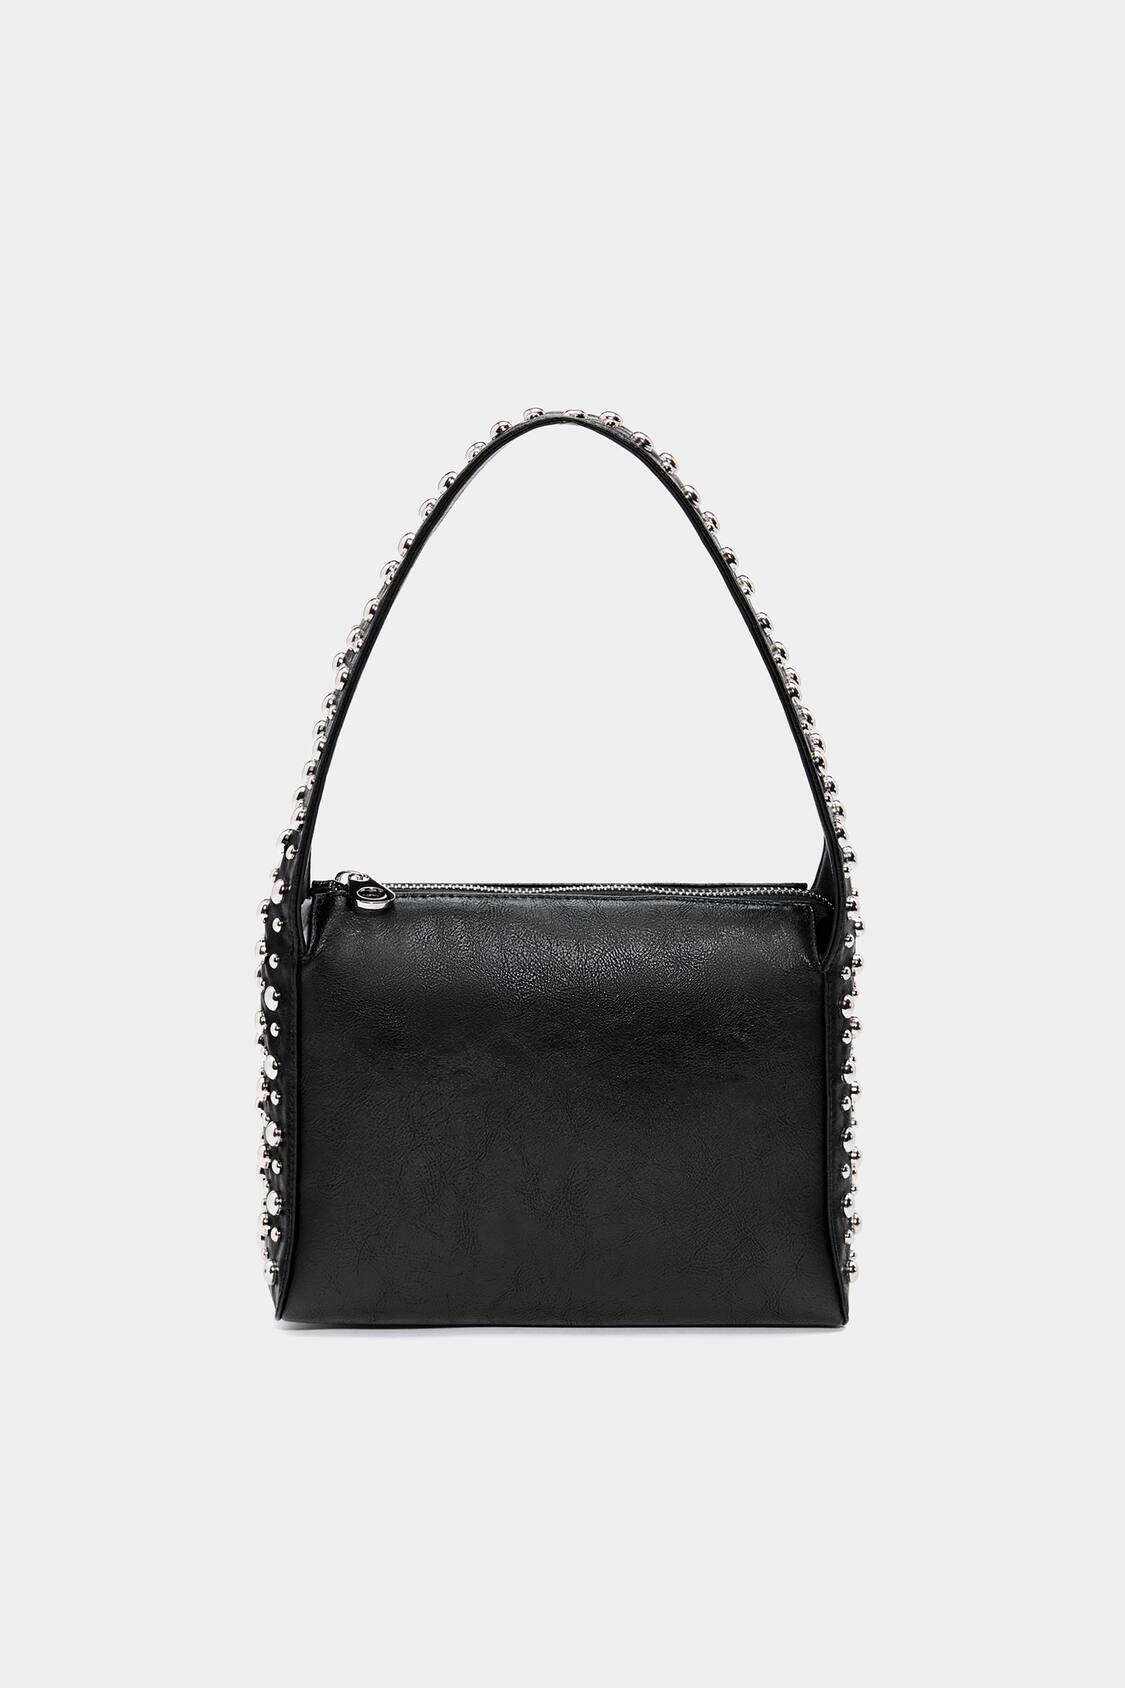 Giorgio Armani Black Beaded Evening Bag